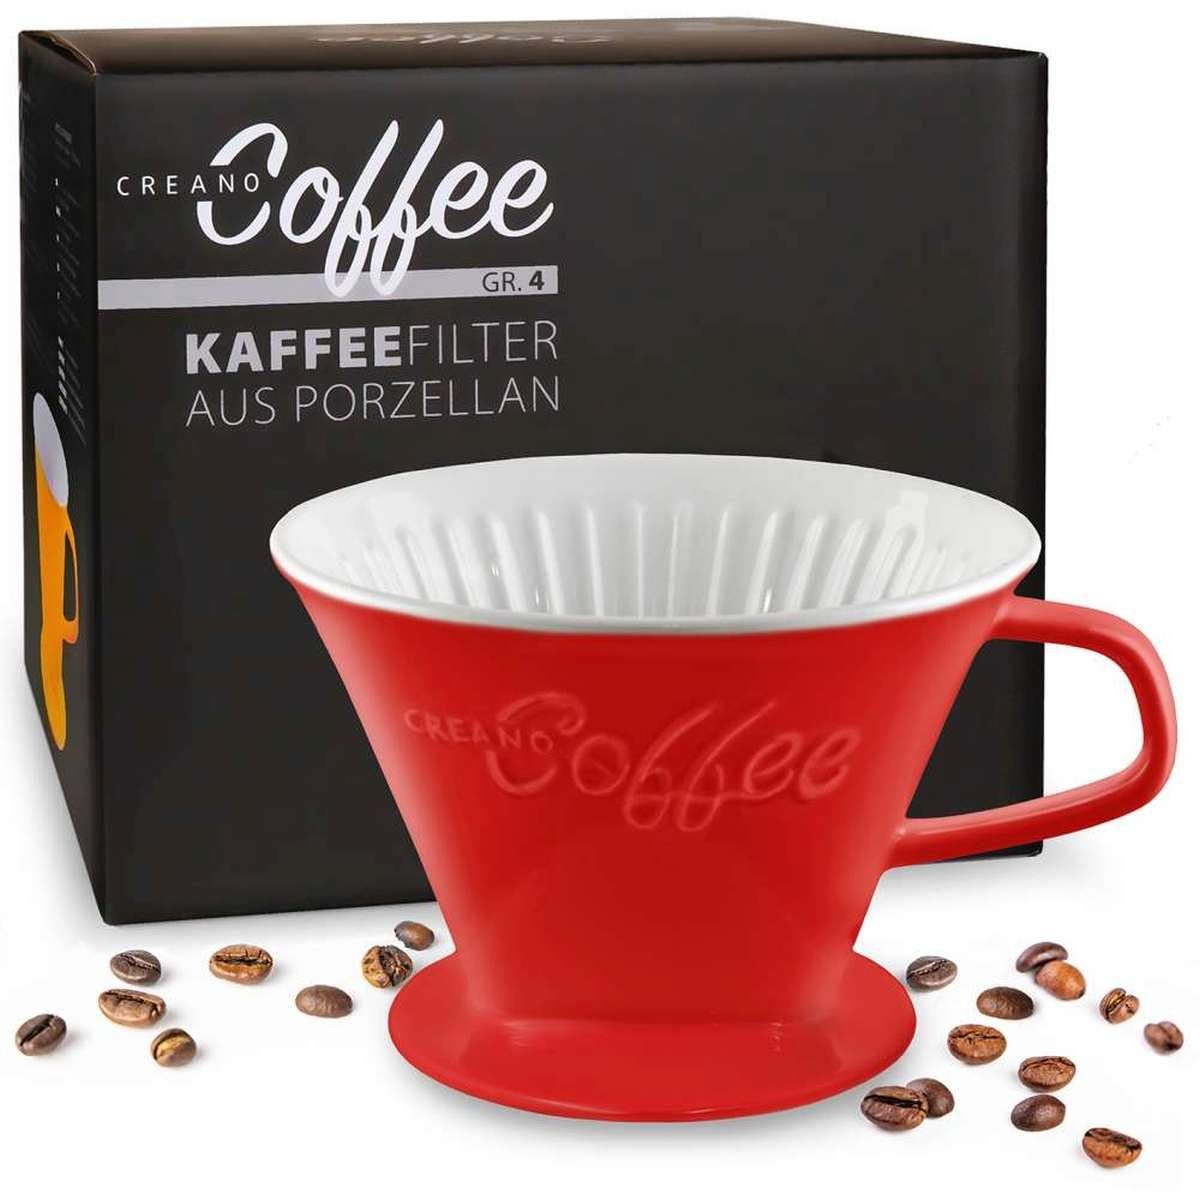 Creano Handfilter Creano roter Kaffeefilter, Porzellan, für Filtergröße 4